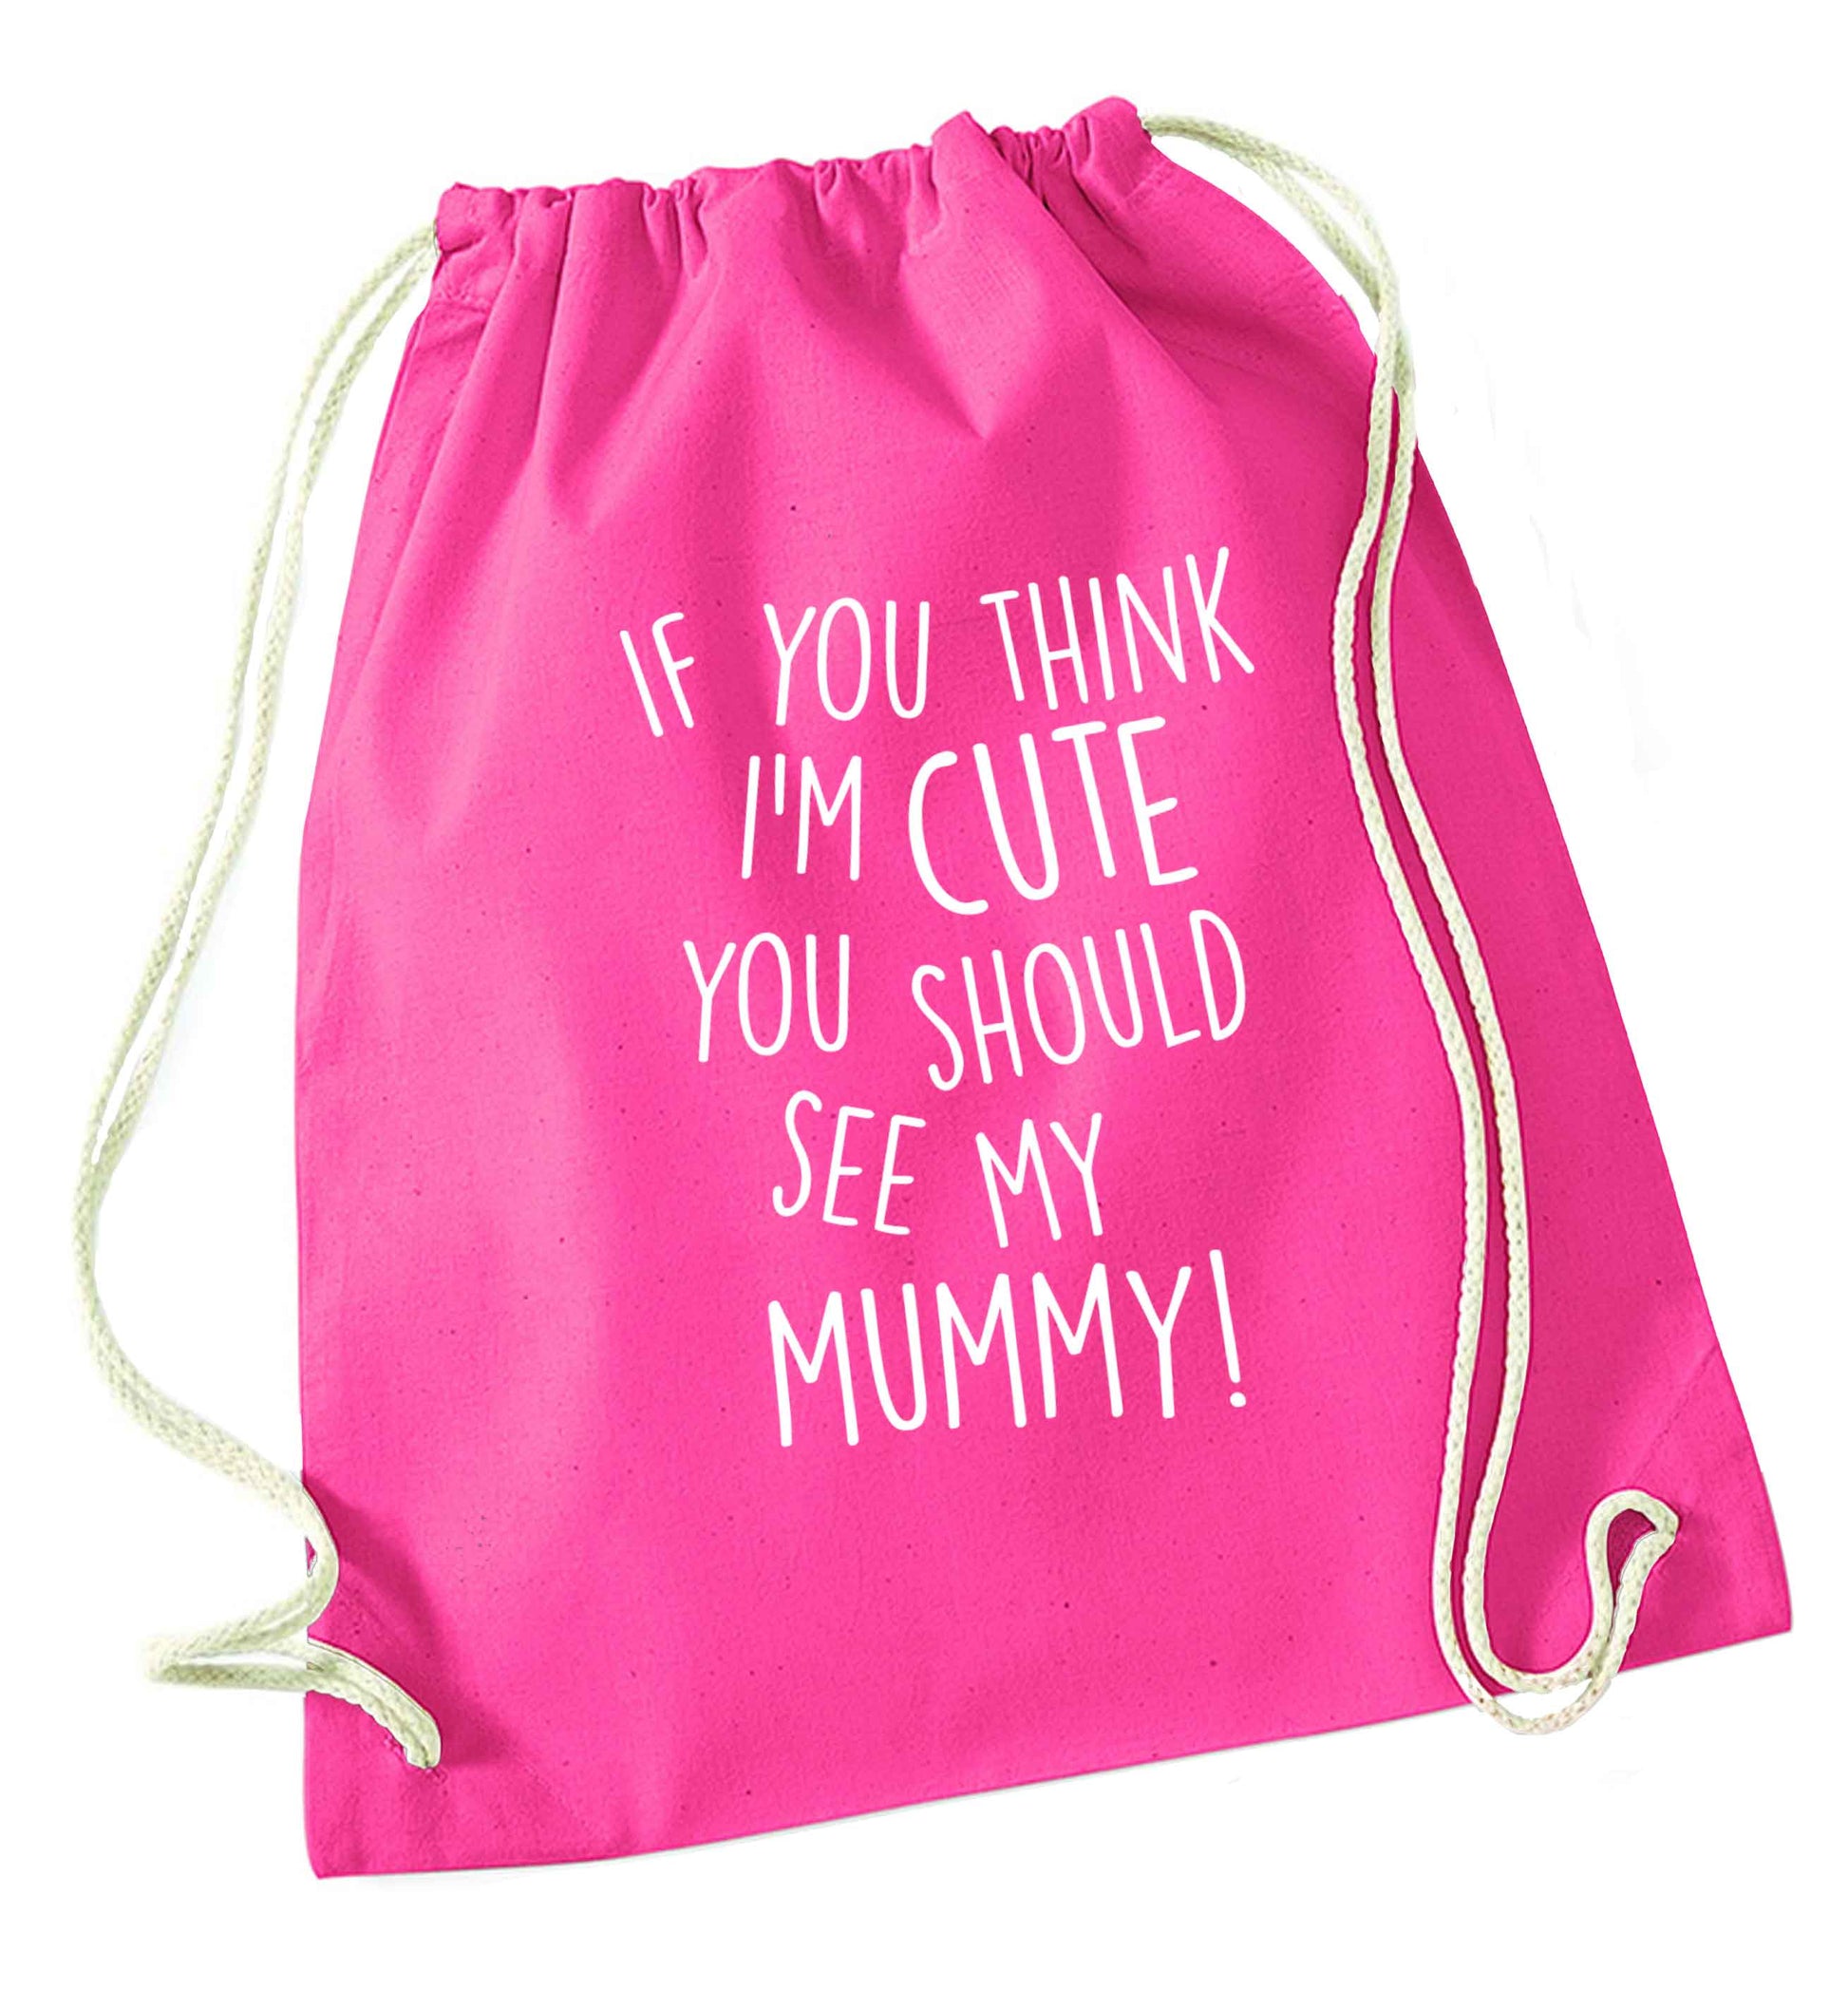 My favourite people call me mummy pink drawstring bag